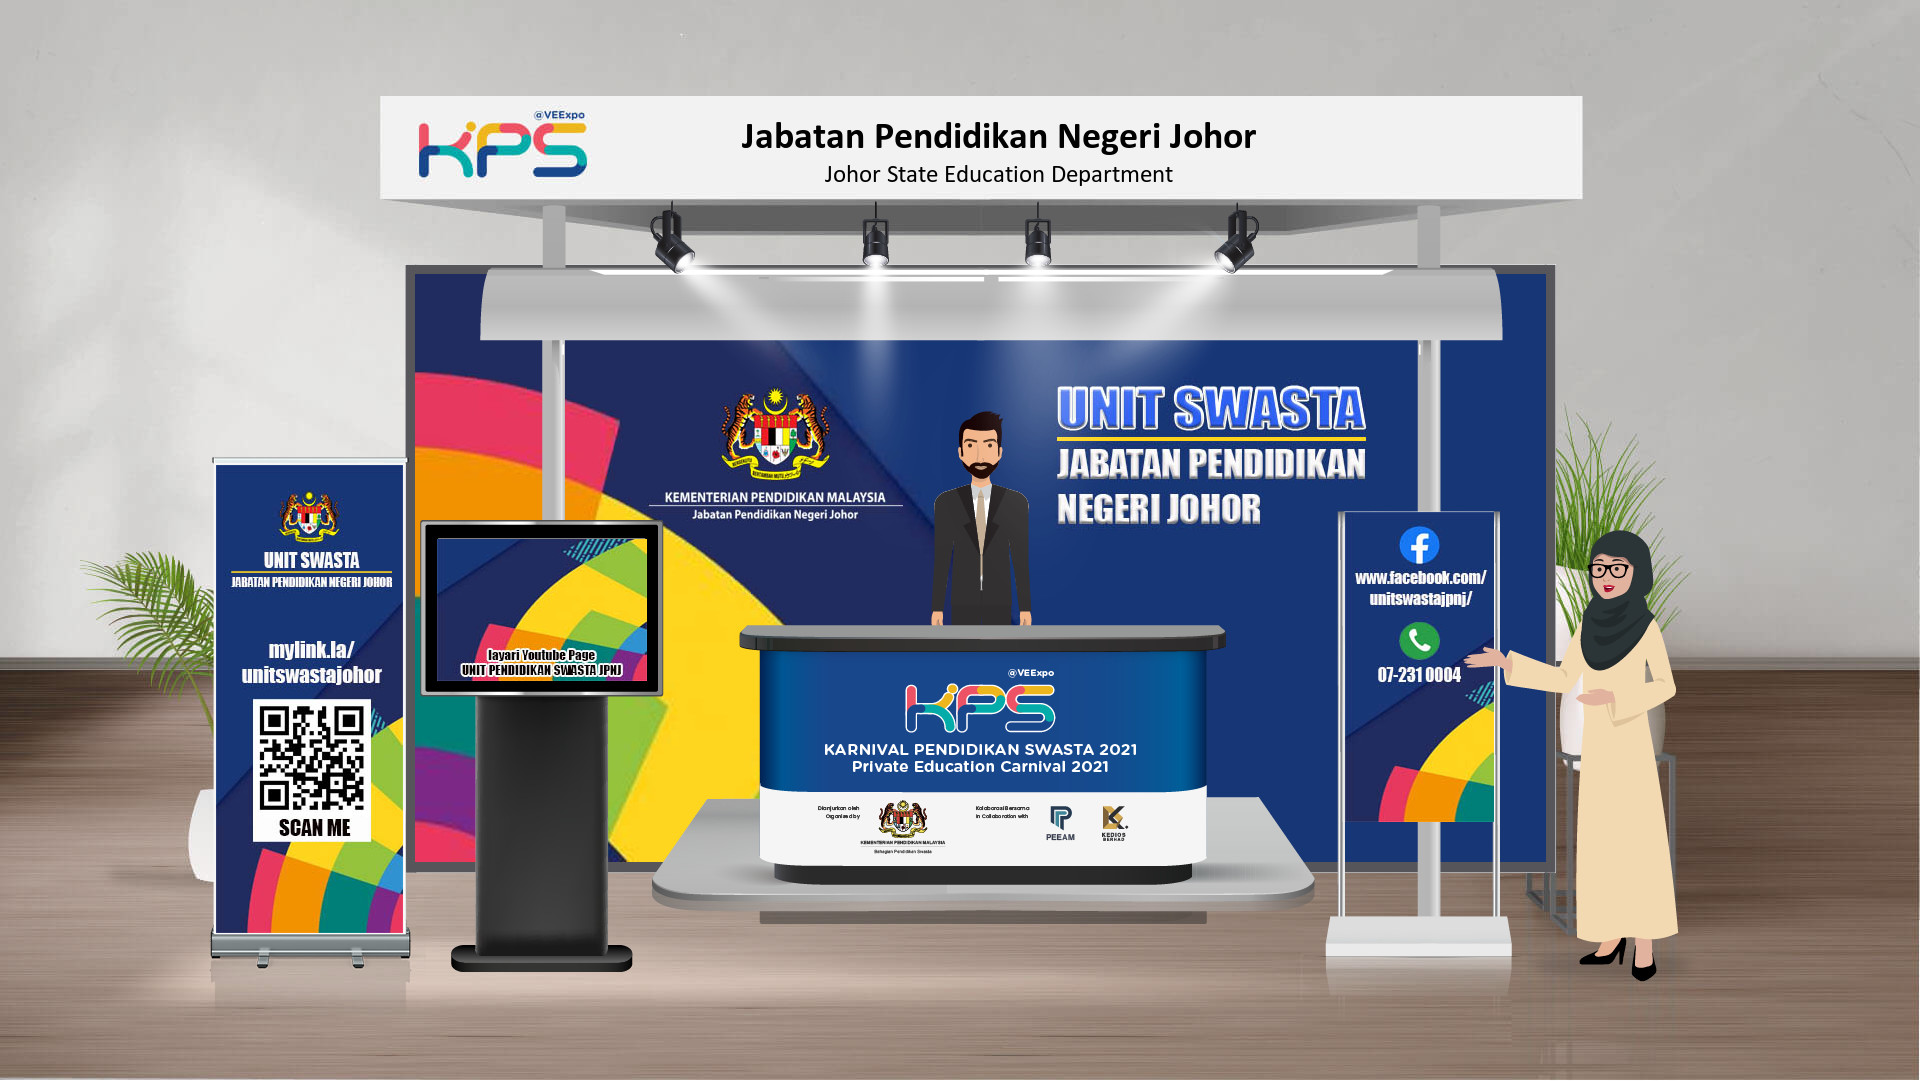 Jabatan Pendidikan Negeri Johor  Exhibition Booth  VPS 2021